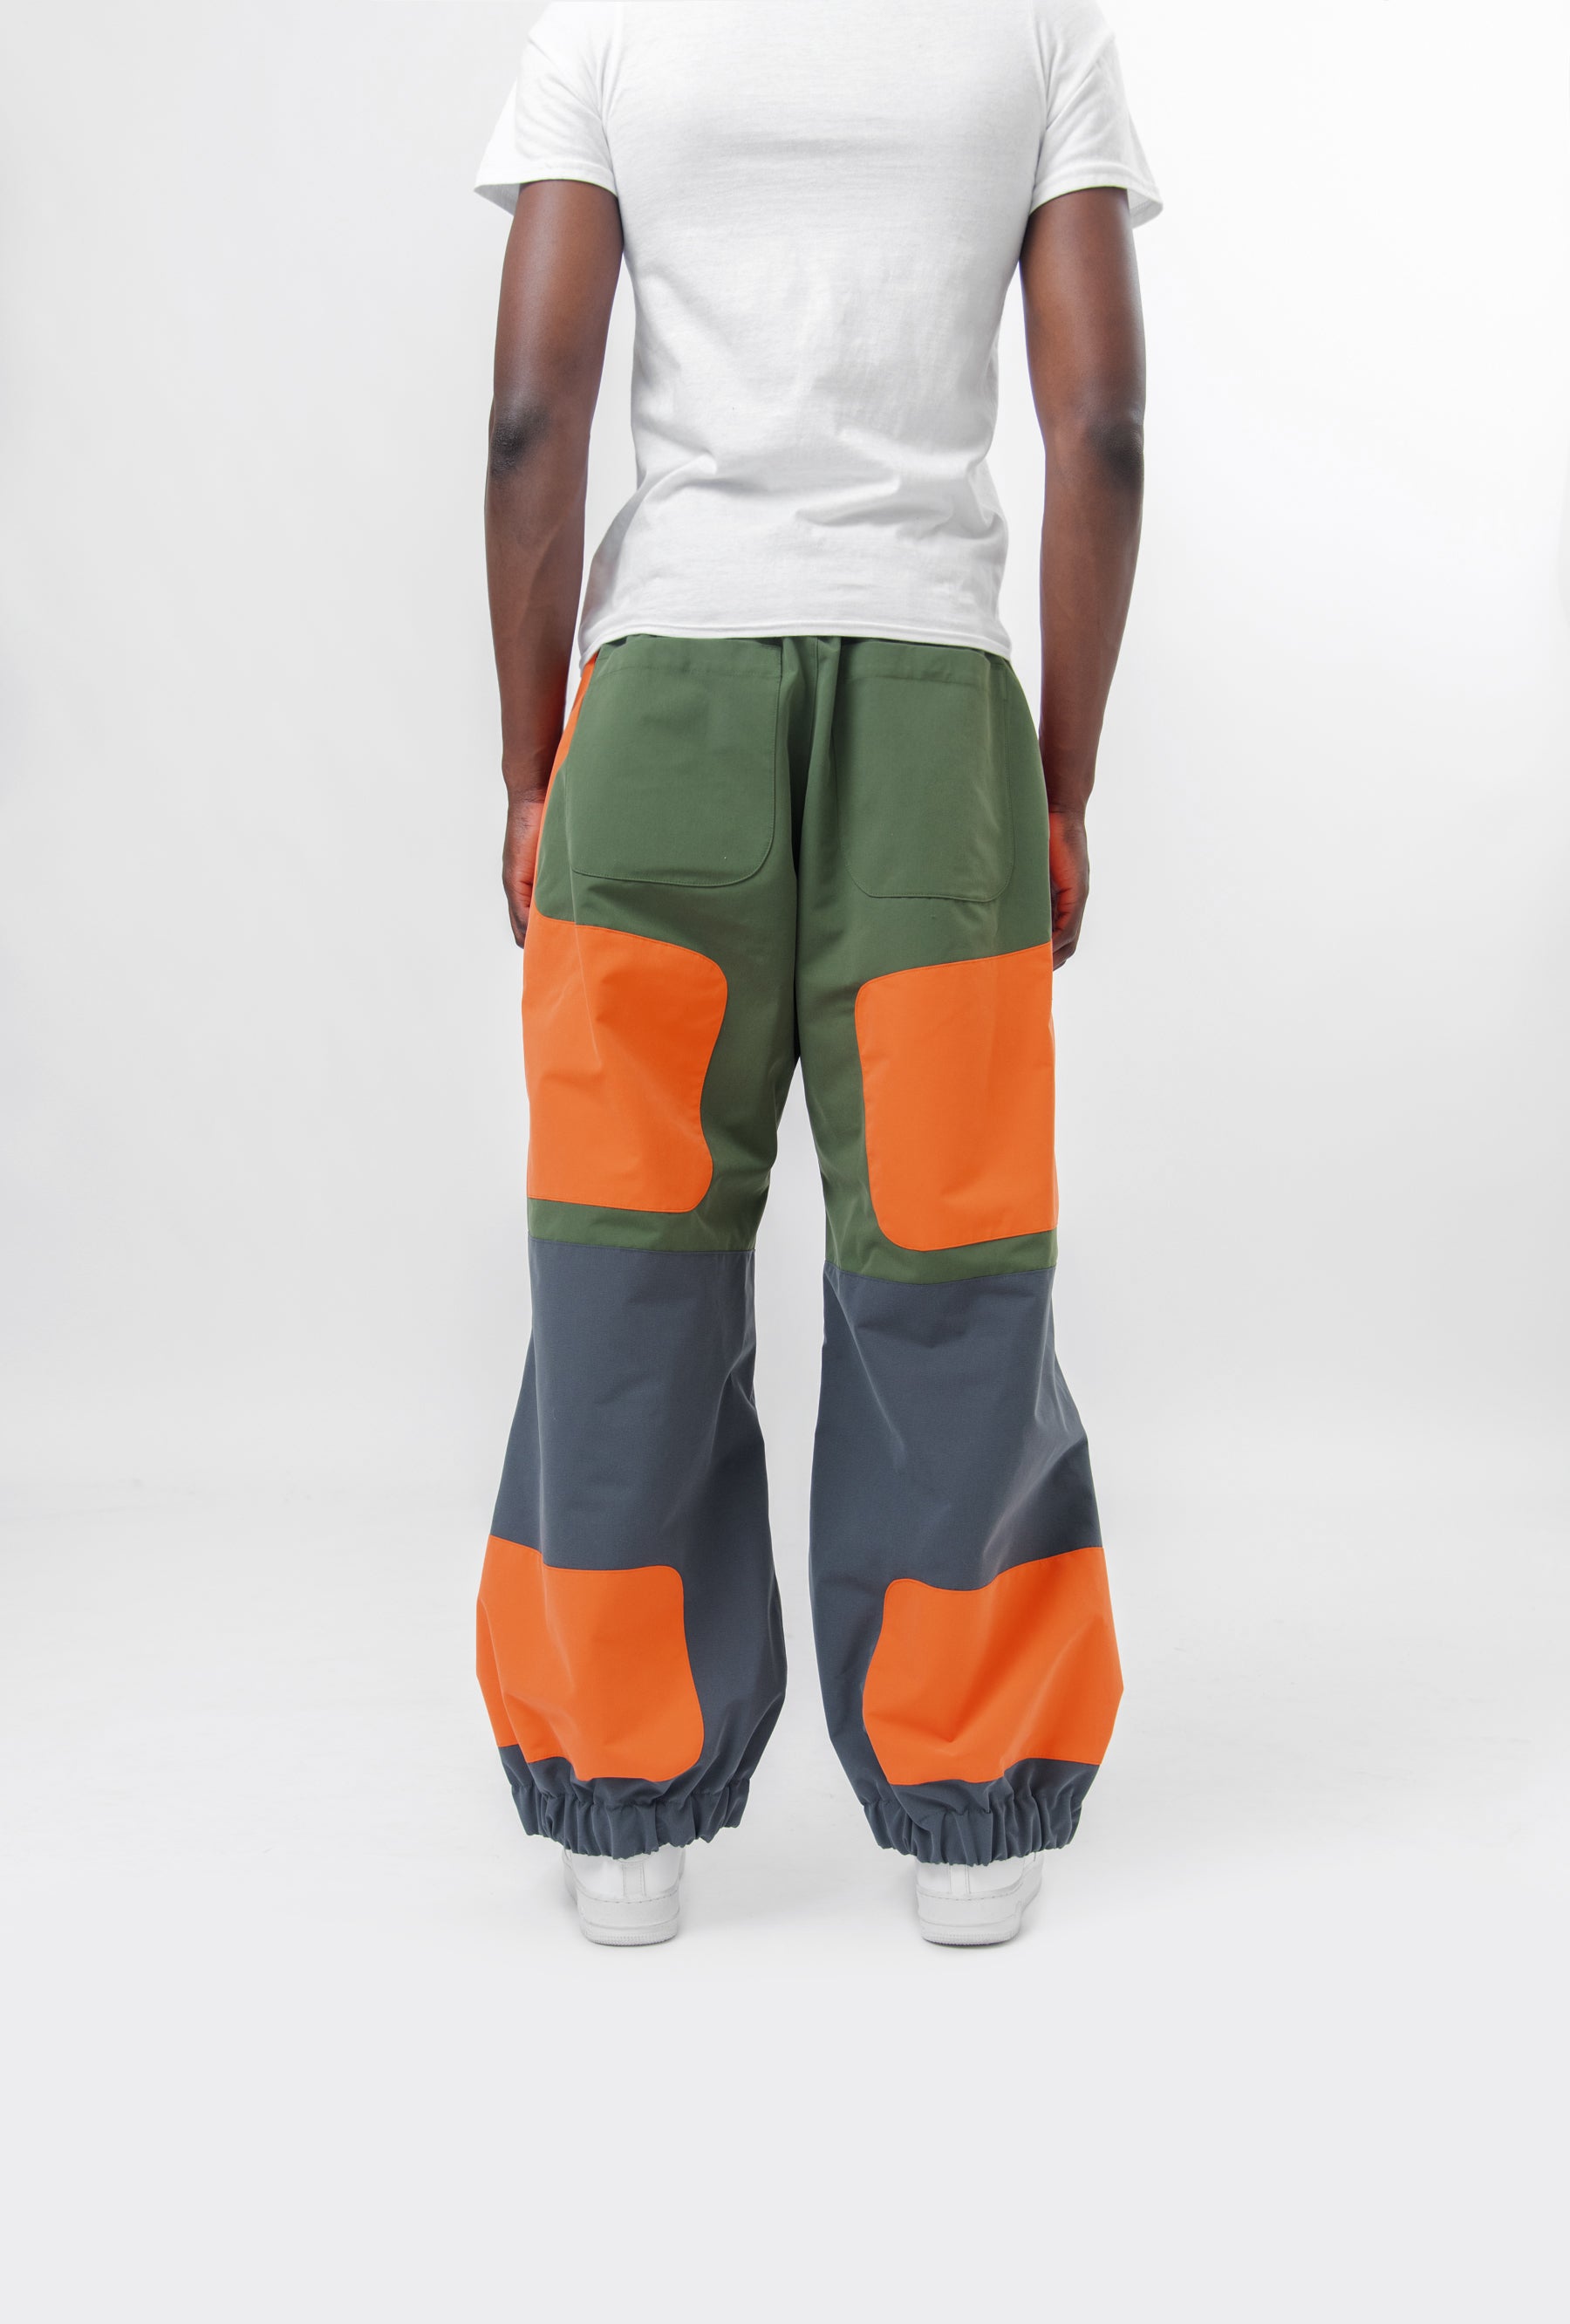 Nylon Canvas Triple Layered Pants Khaki/Orange/Grey WM-P011-051